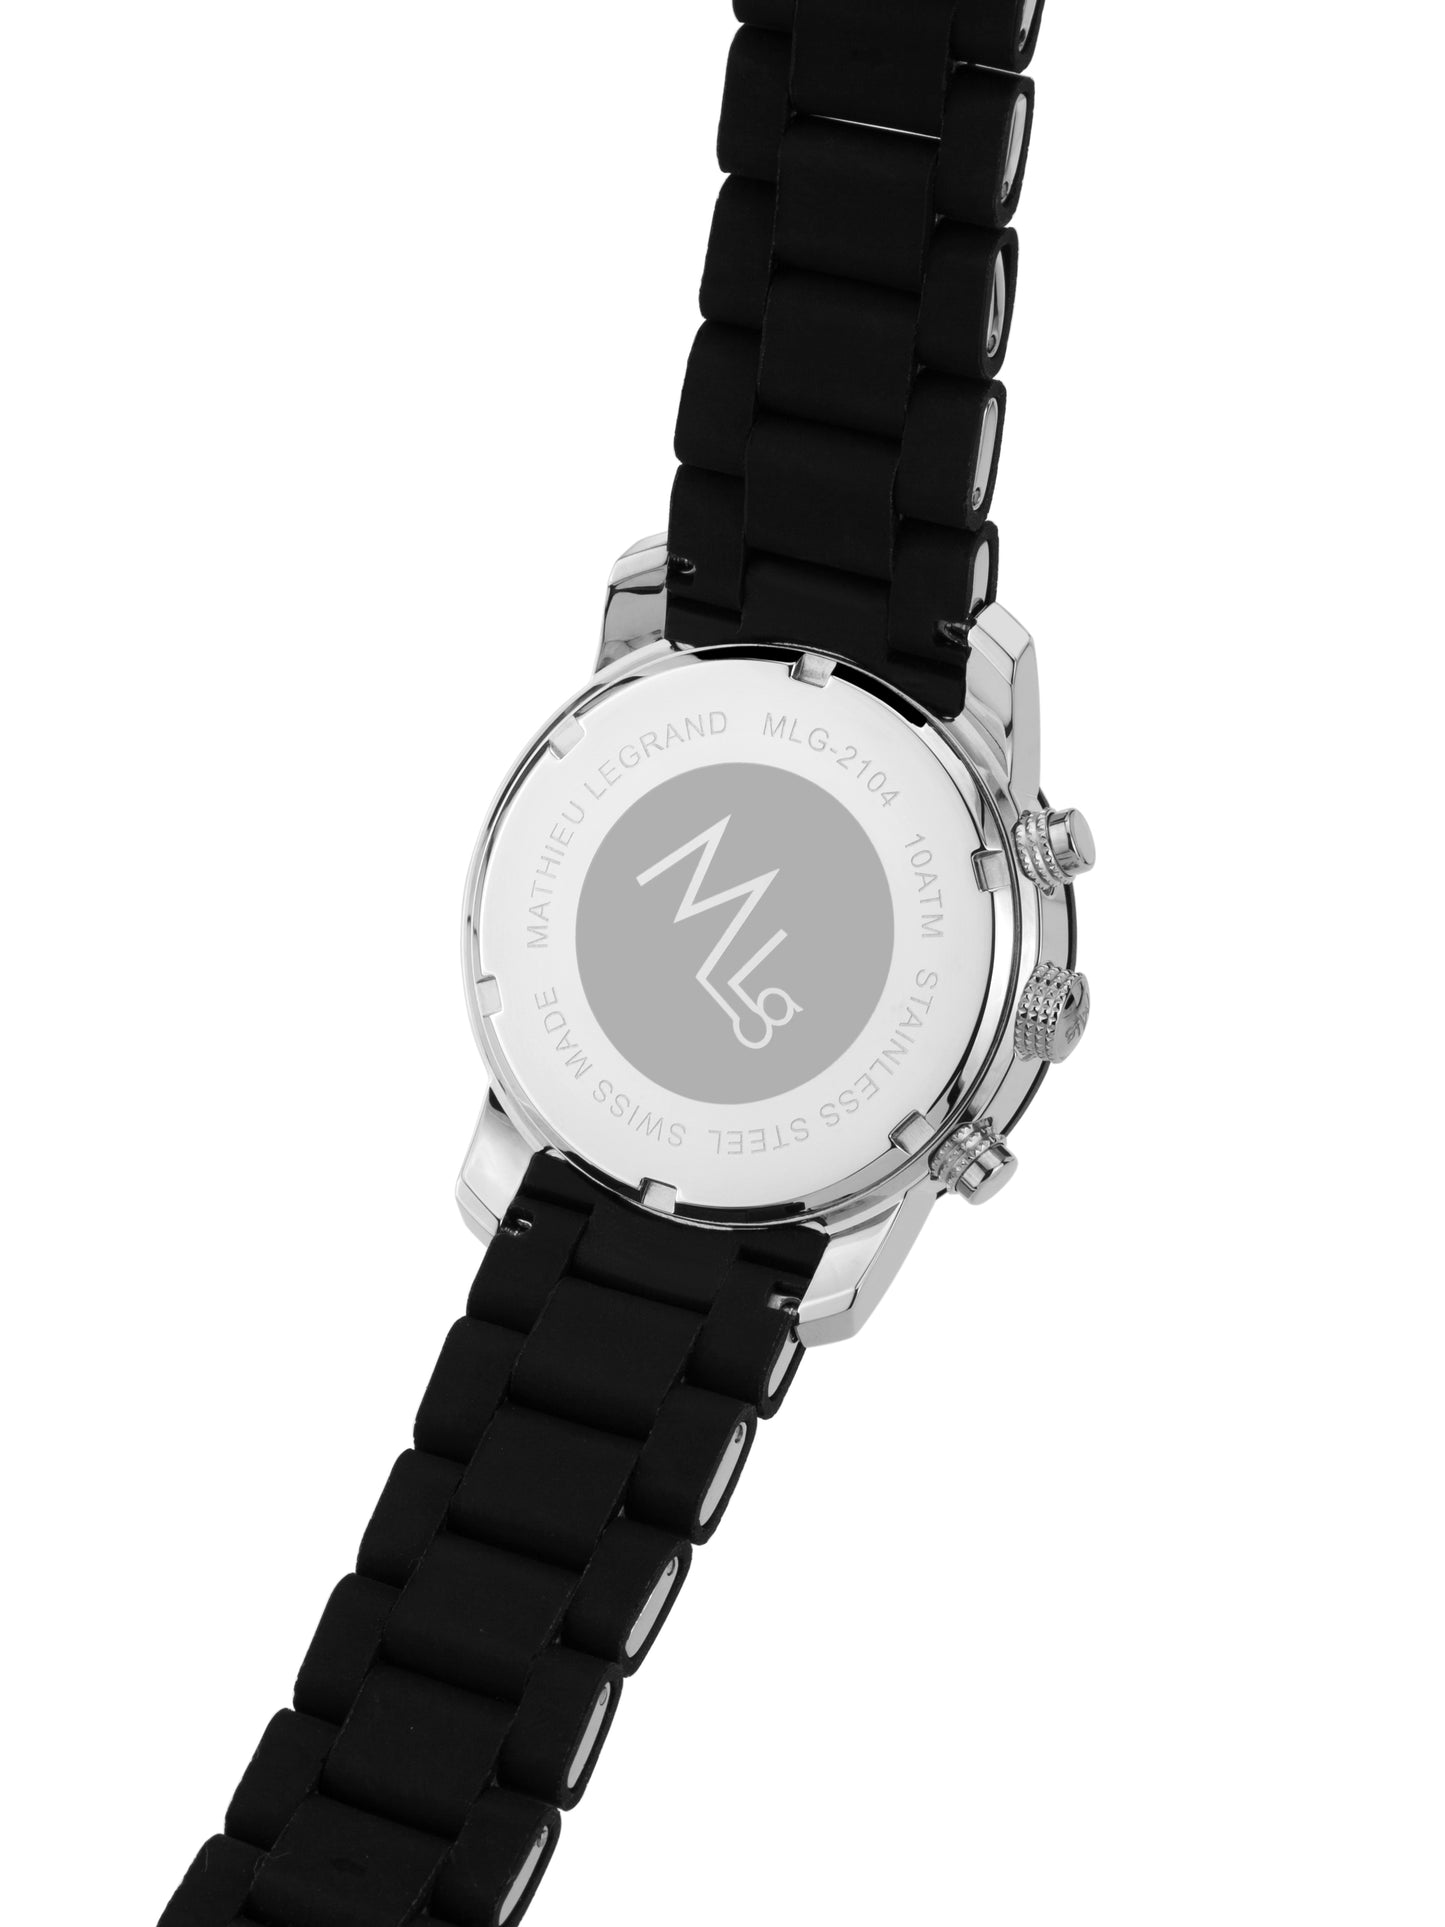 Automatic watches — Nacré — Mathieu Legrand — steel black silicone